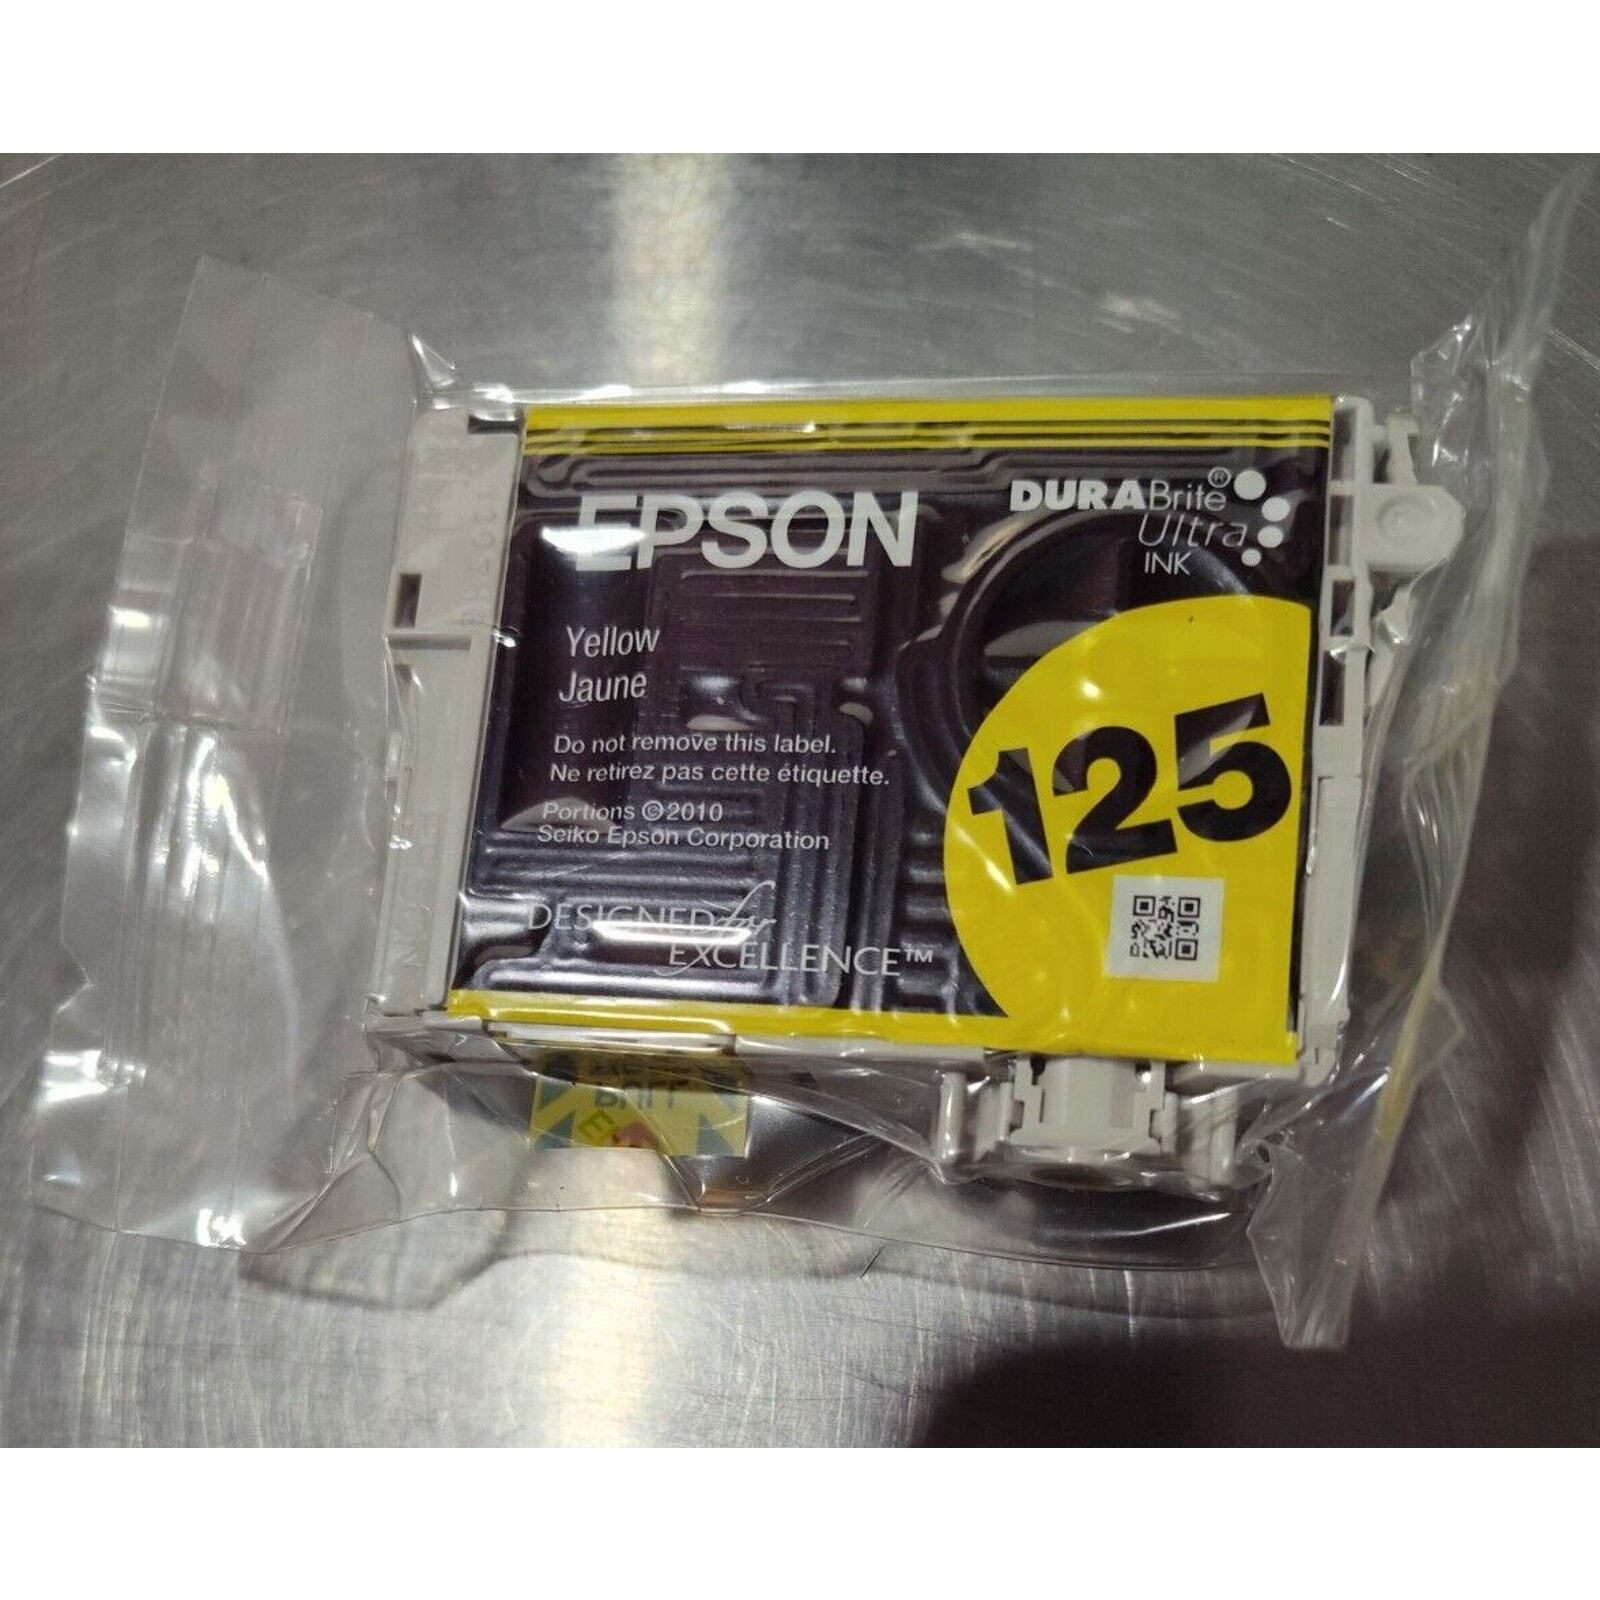 Epson Durabrite Ultra 125 Yellow Printer Ink New & Sealed